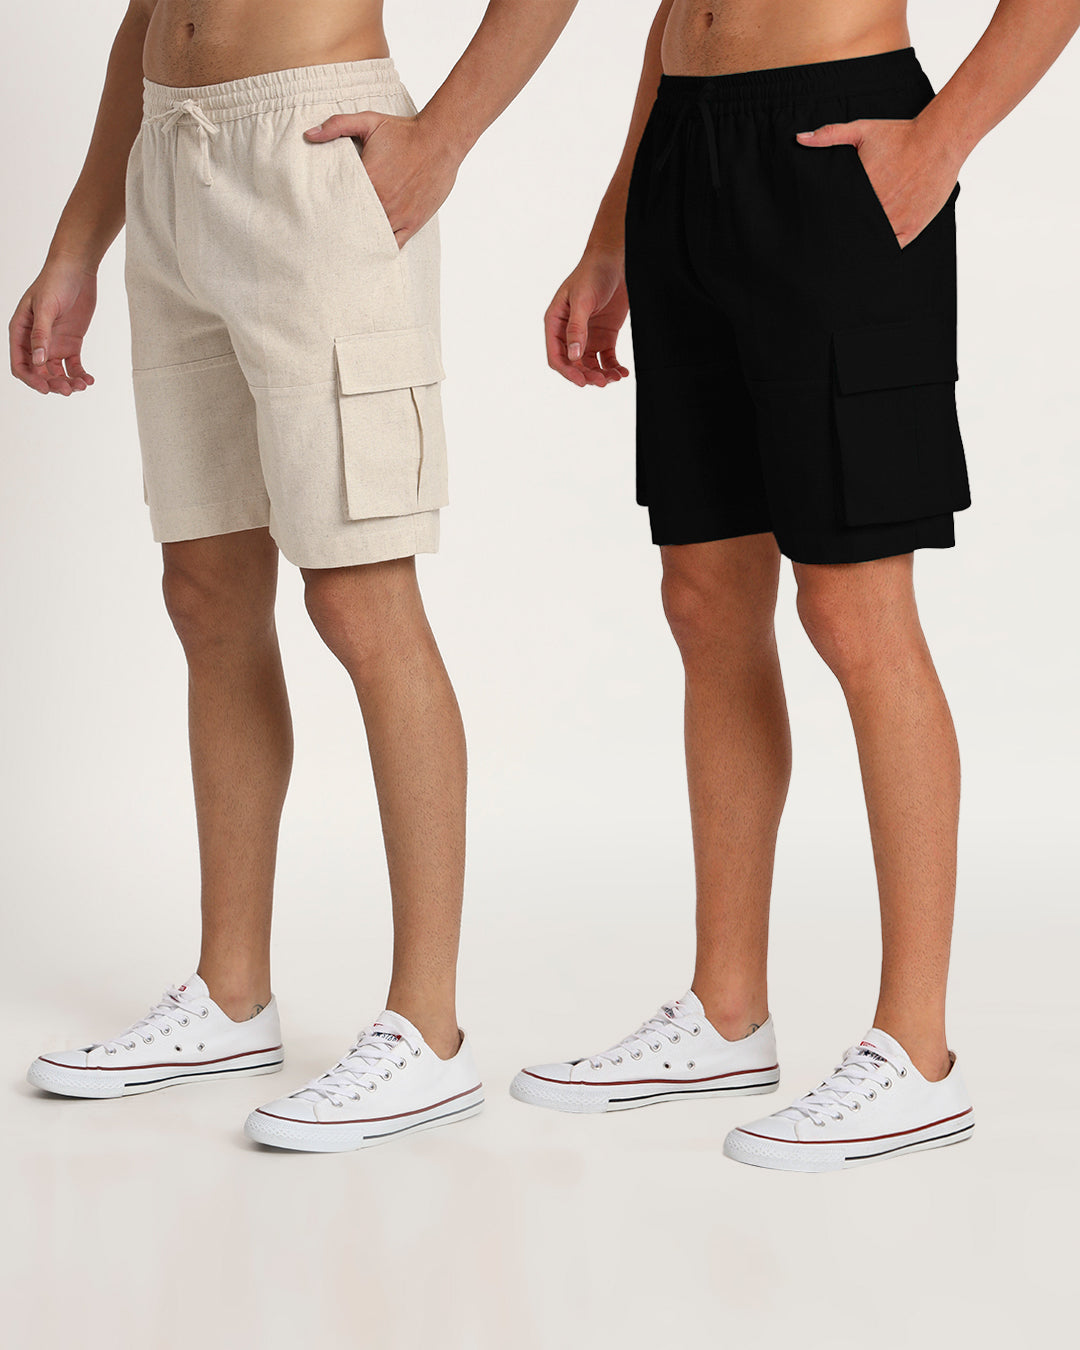 Combo : Slub Comfort Cargo Shorts Beige & Black Men's Shorts